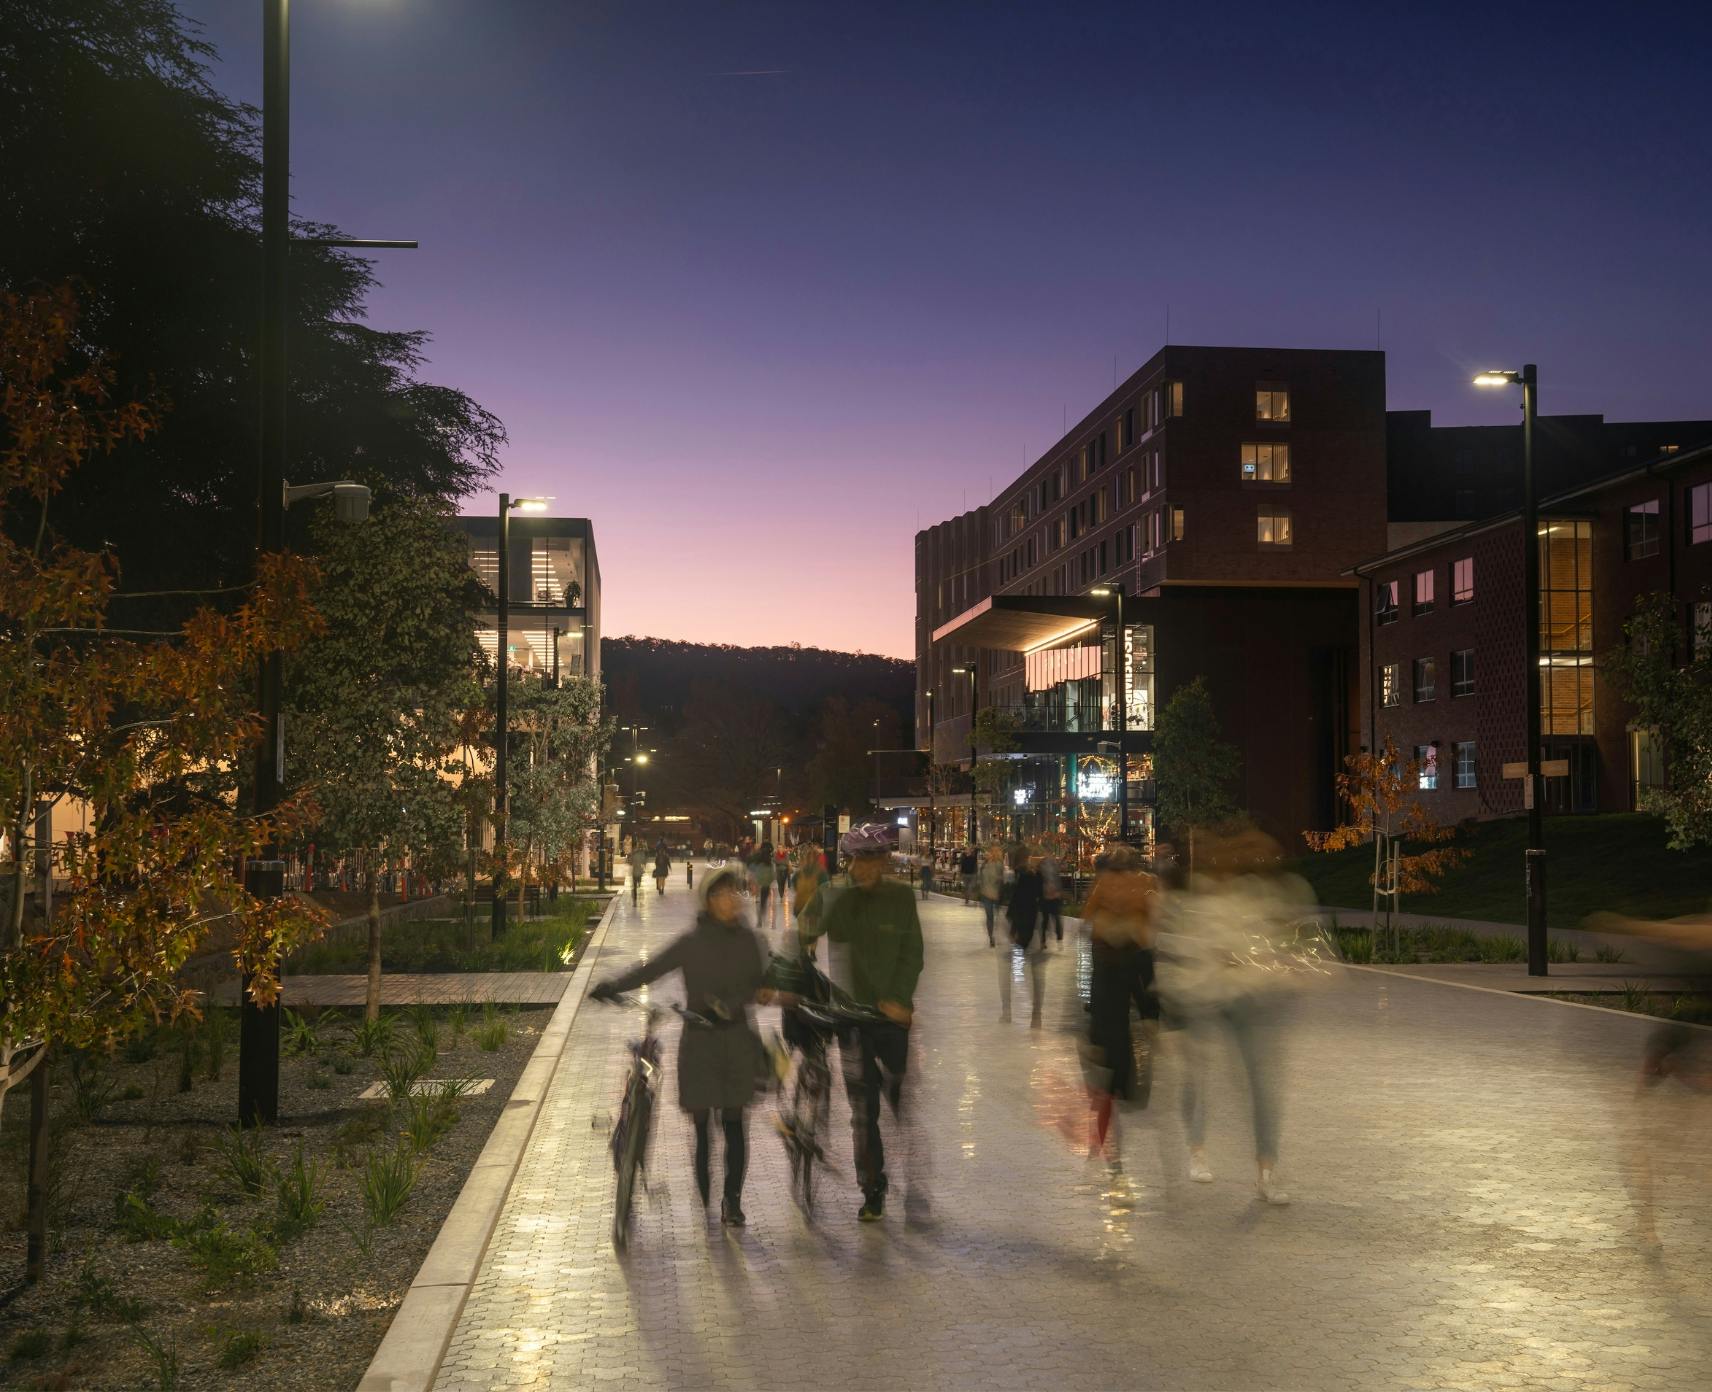 Students walk and bike across university avenue at dusk